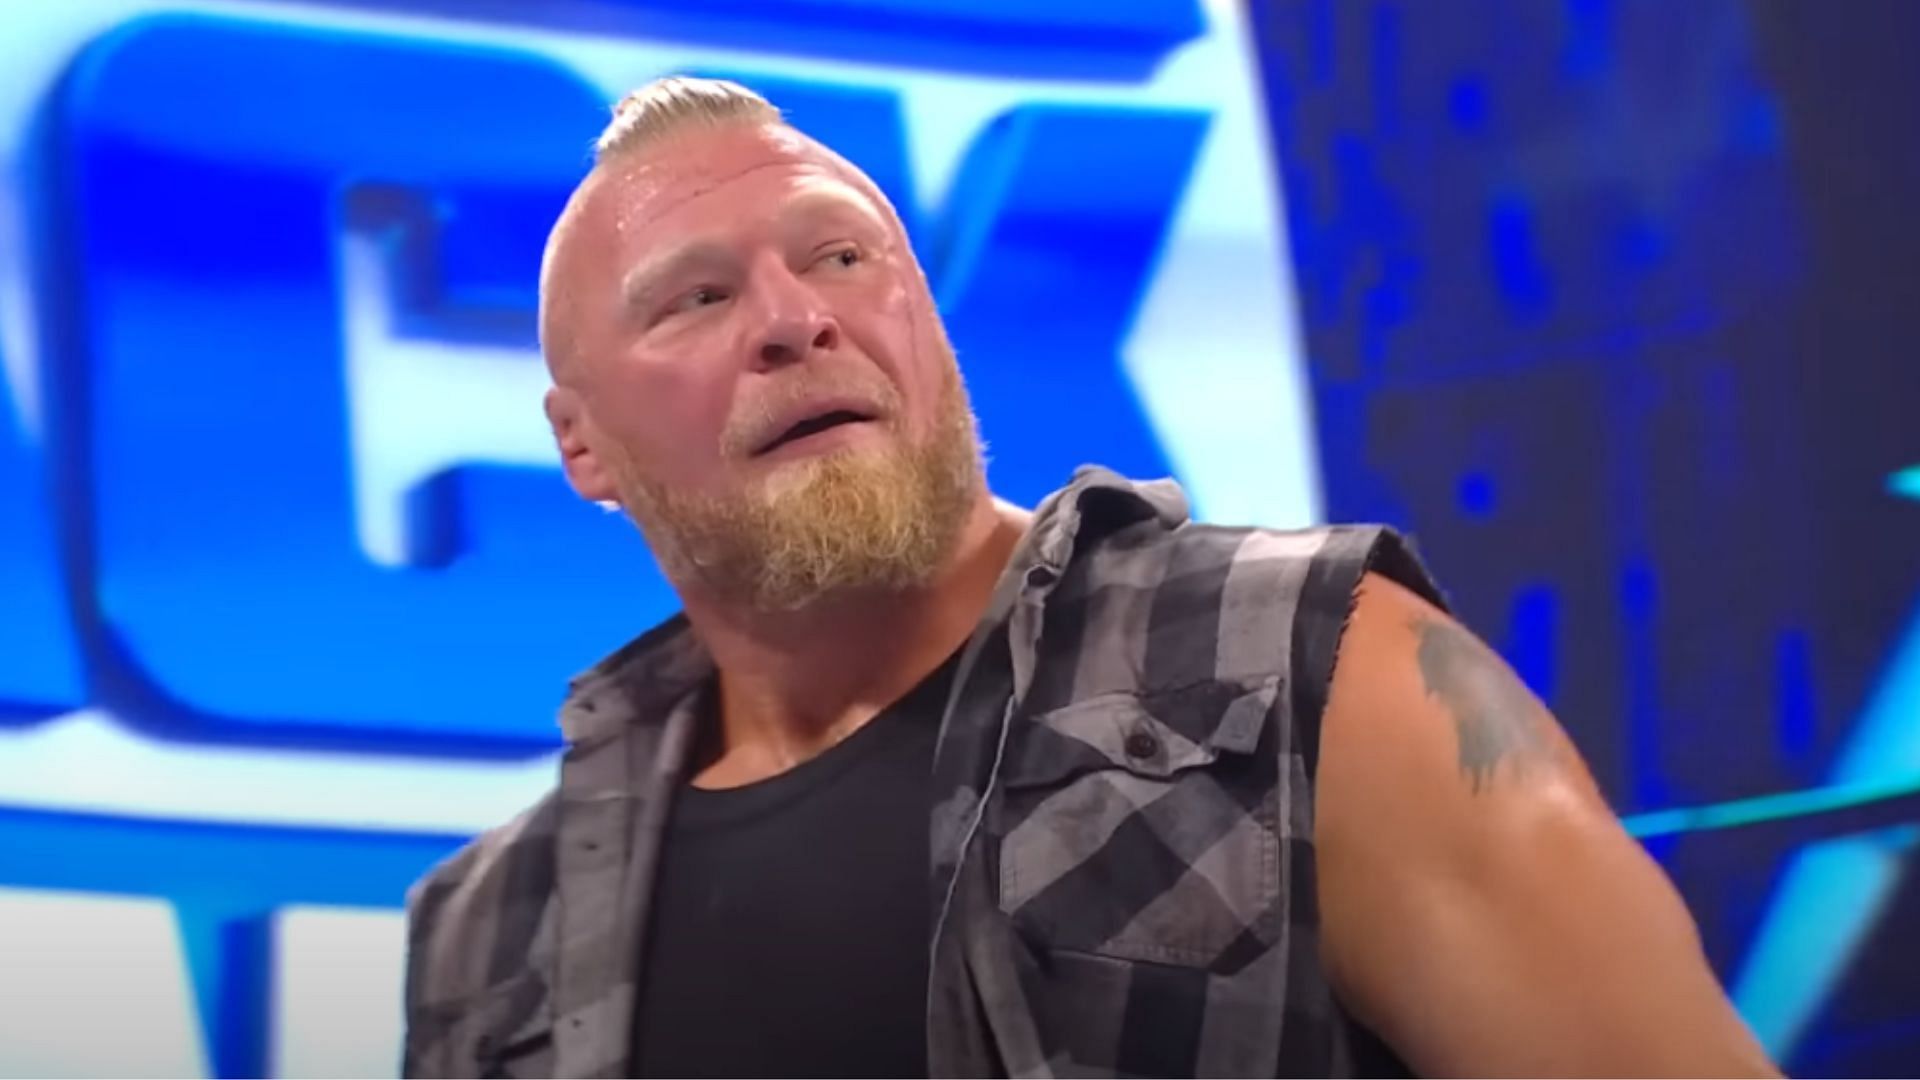 Brock Lesnar is one of WWE